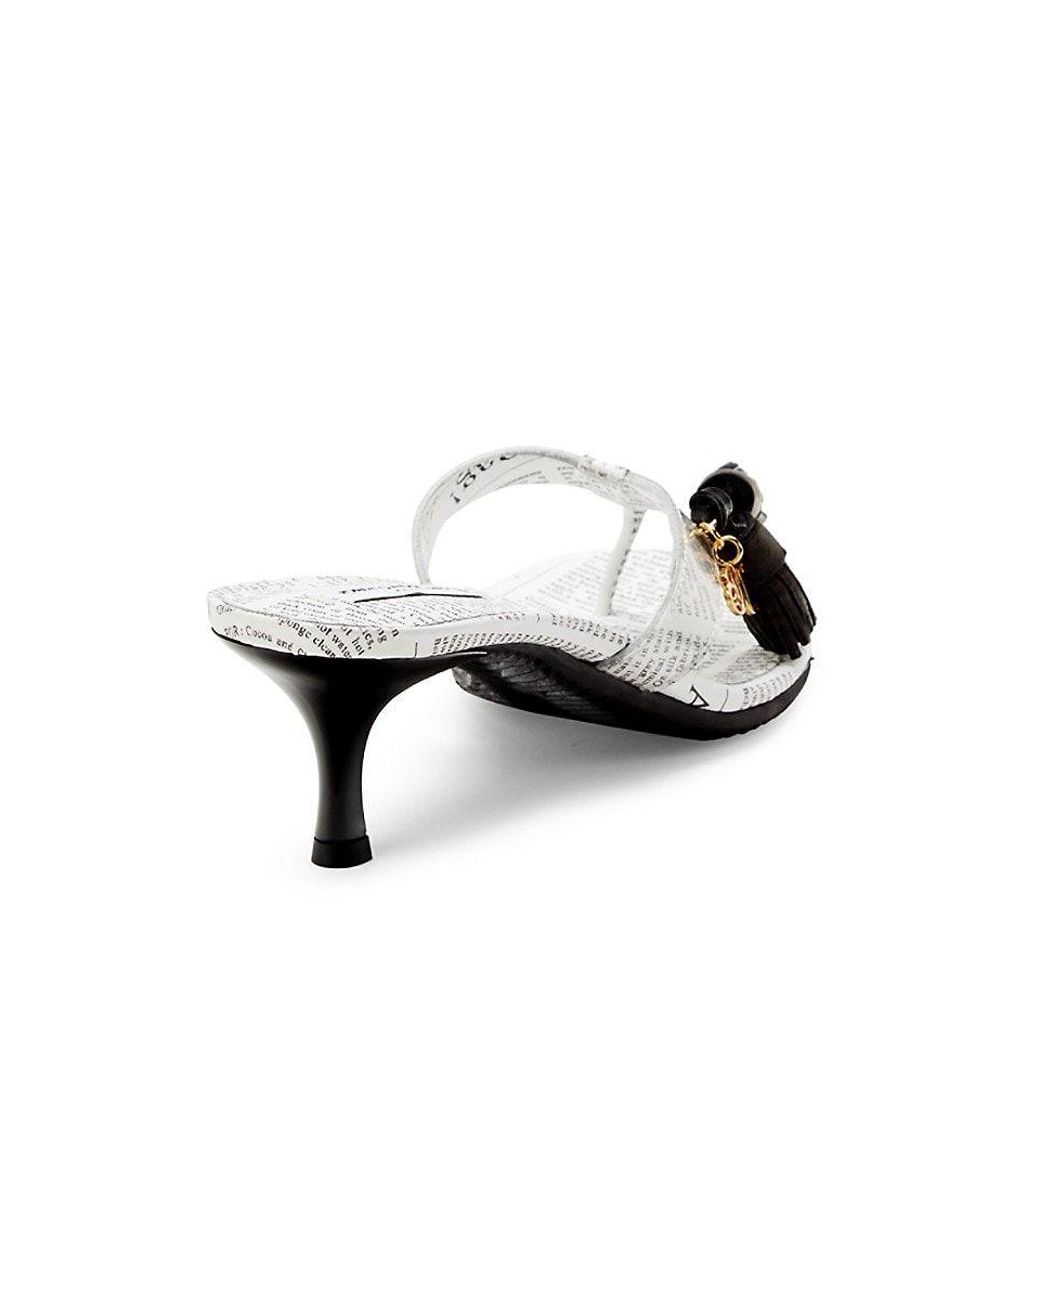 John Galliano Criss Cross Black & White Logo Platform Sandals NEW $455 Size  35.5